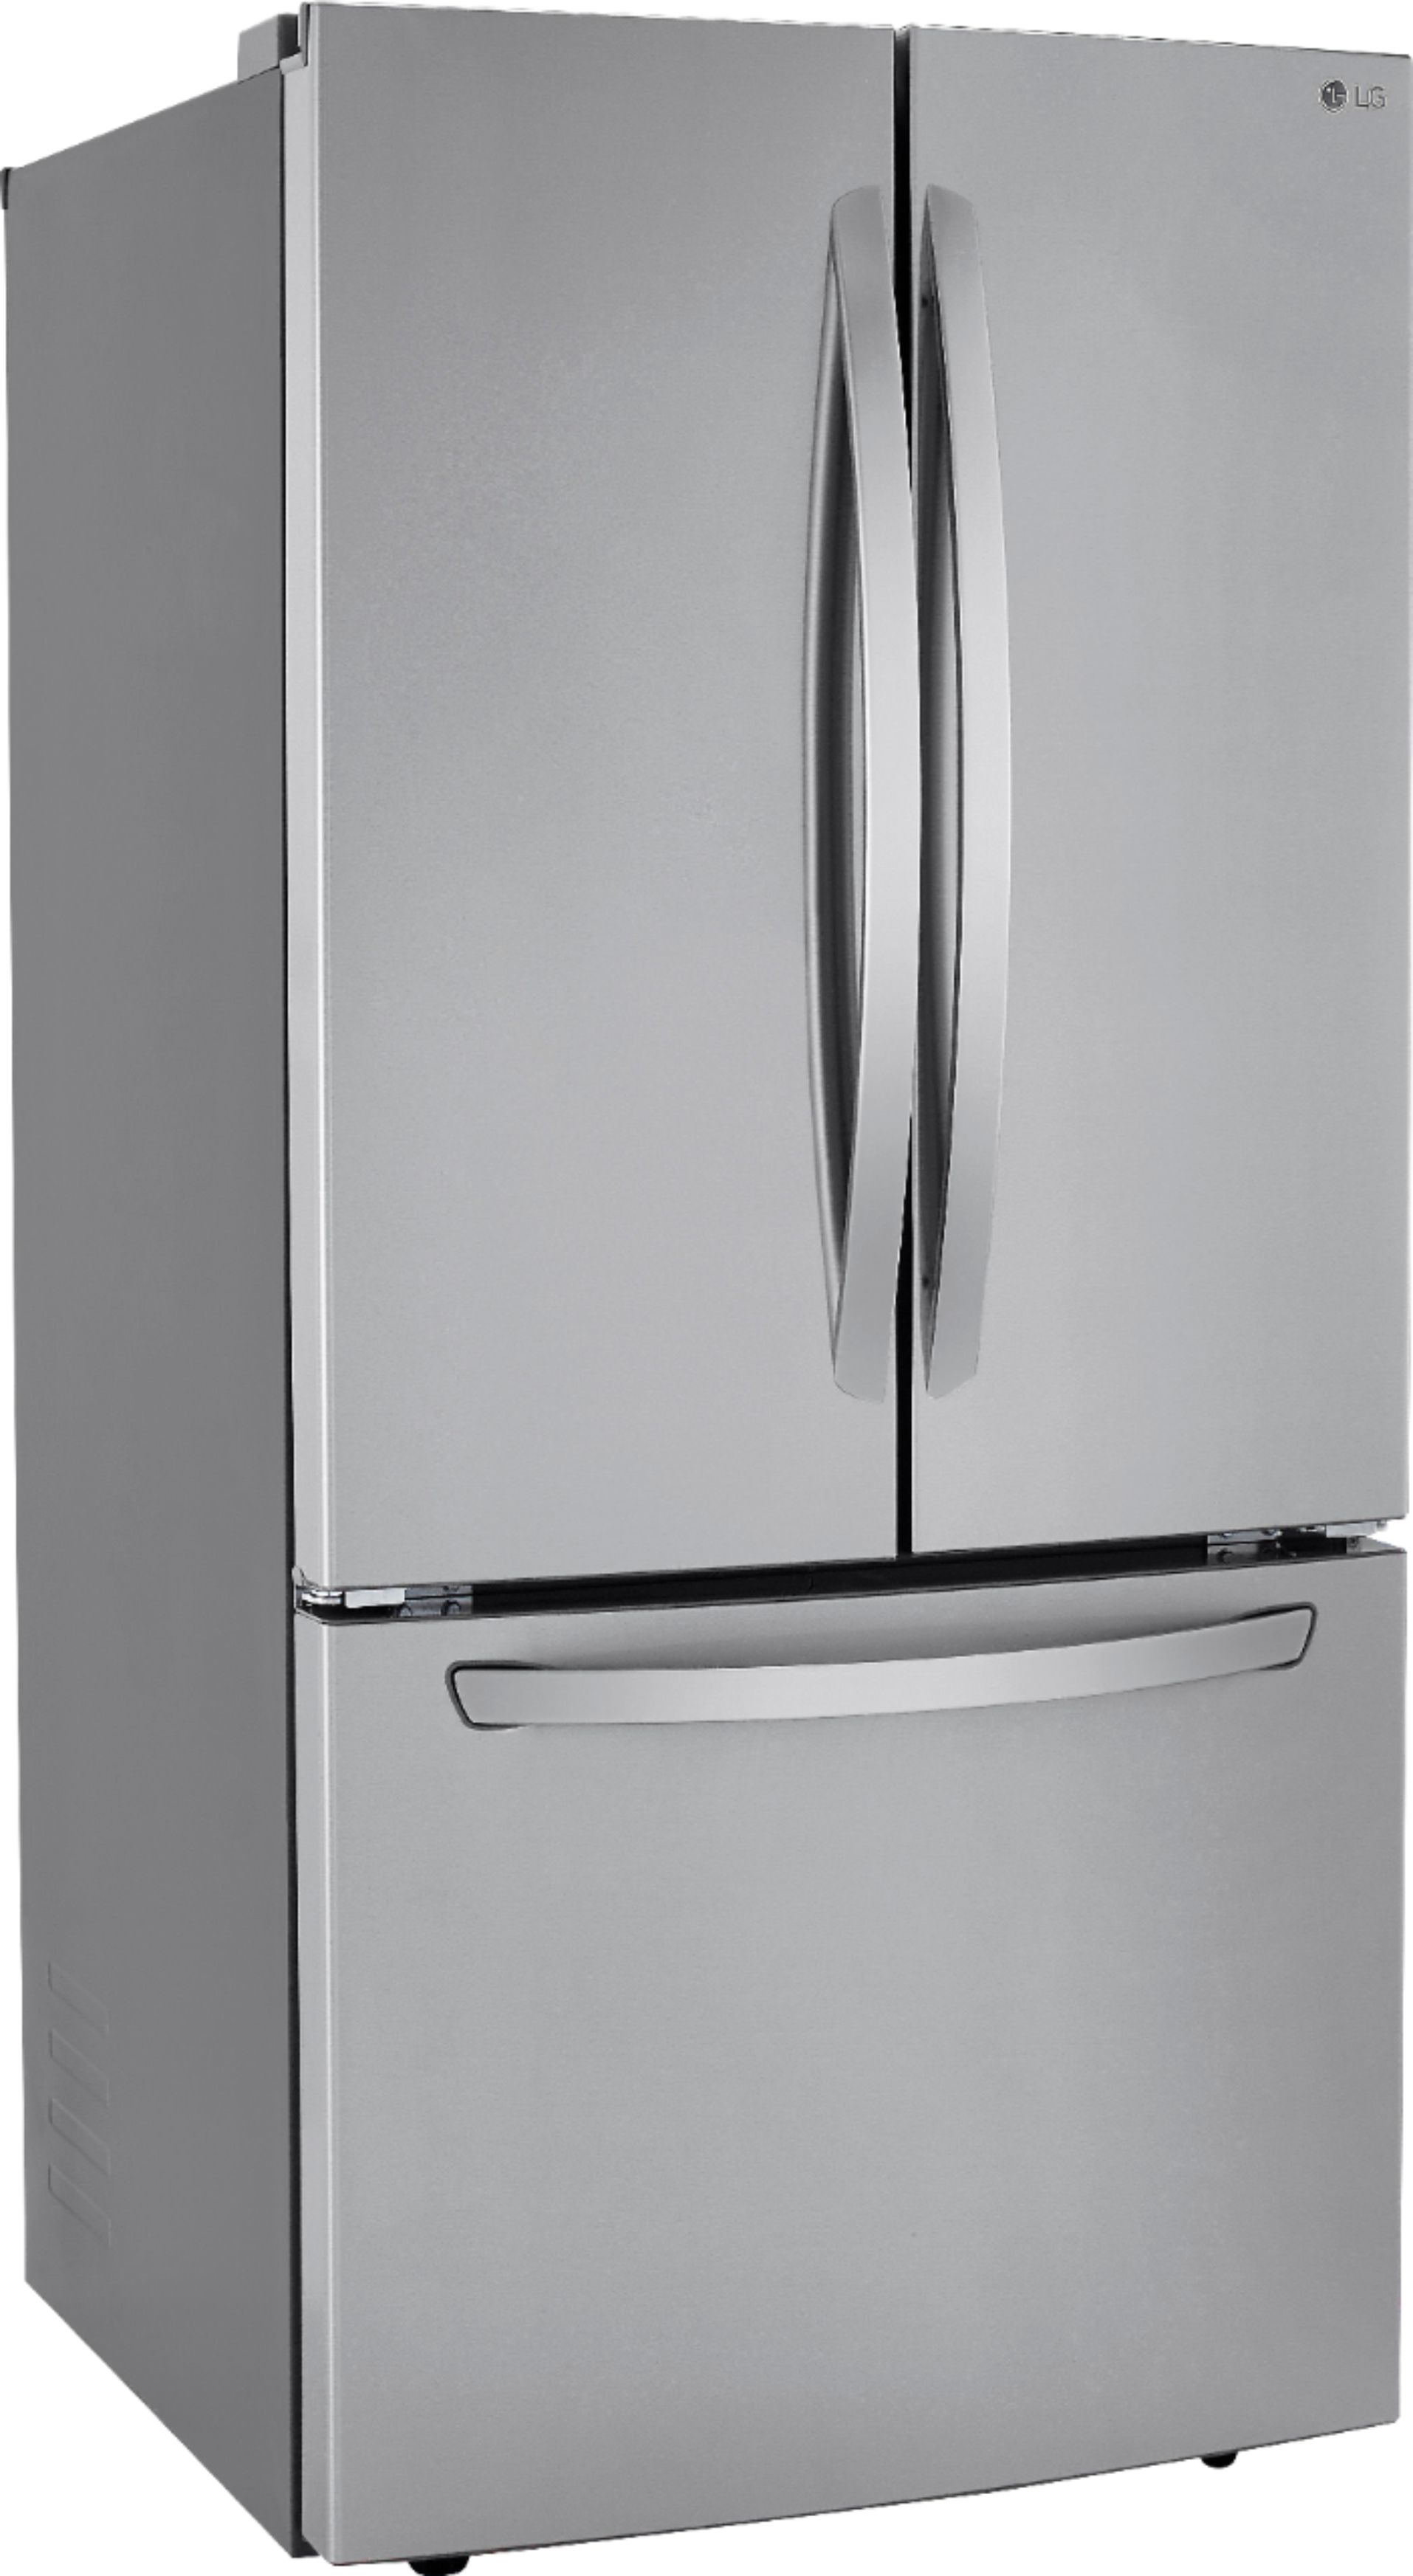 LG 25.1 Cu. Ft. French Door Refrigerator Stainless steel LRFCS2503S Best Buy Stainless Steel Fridge